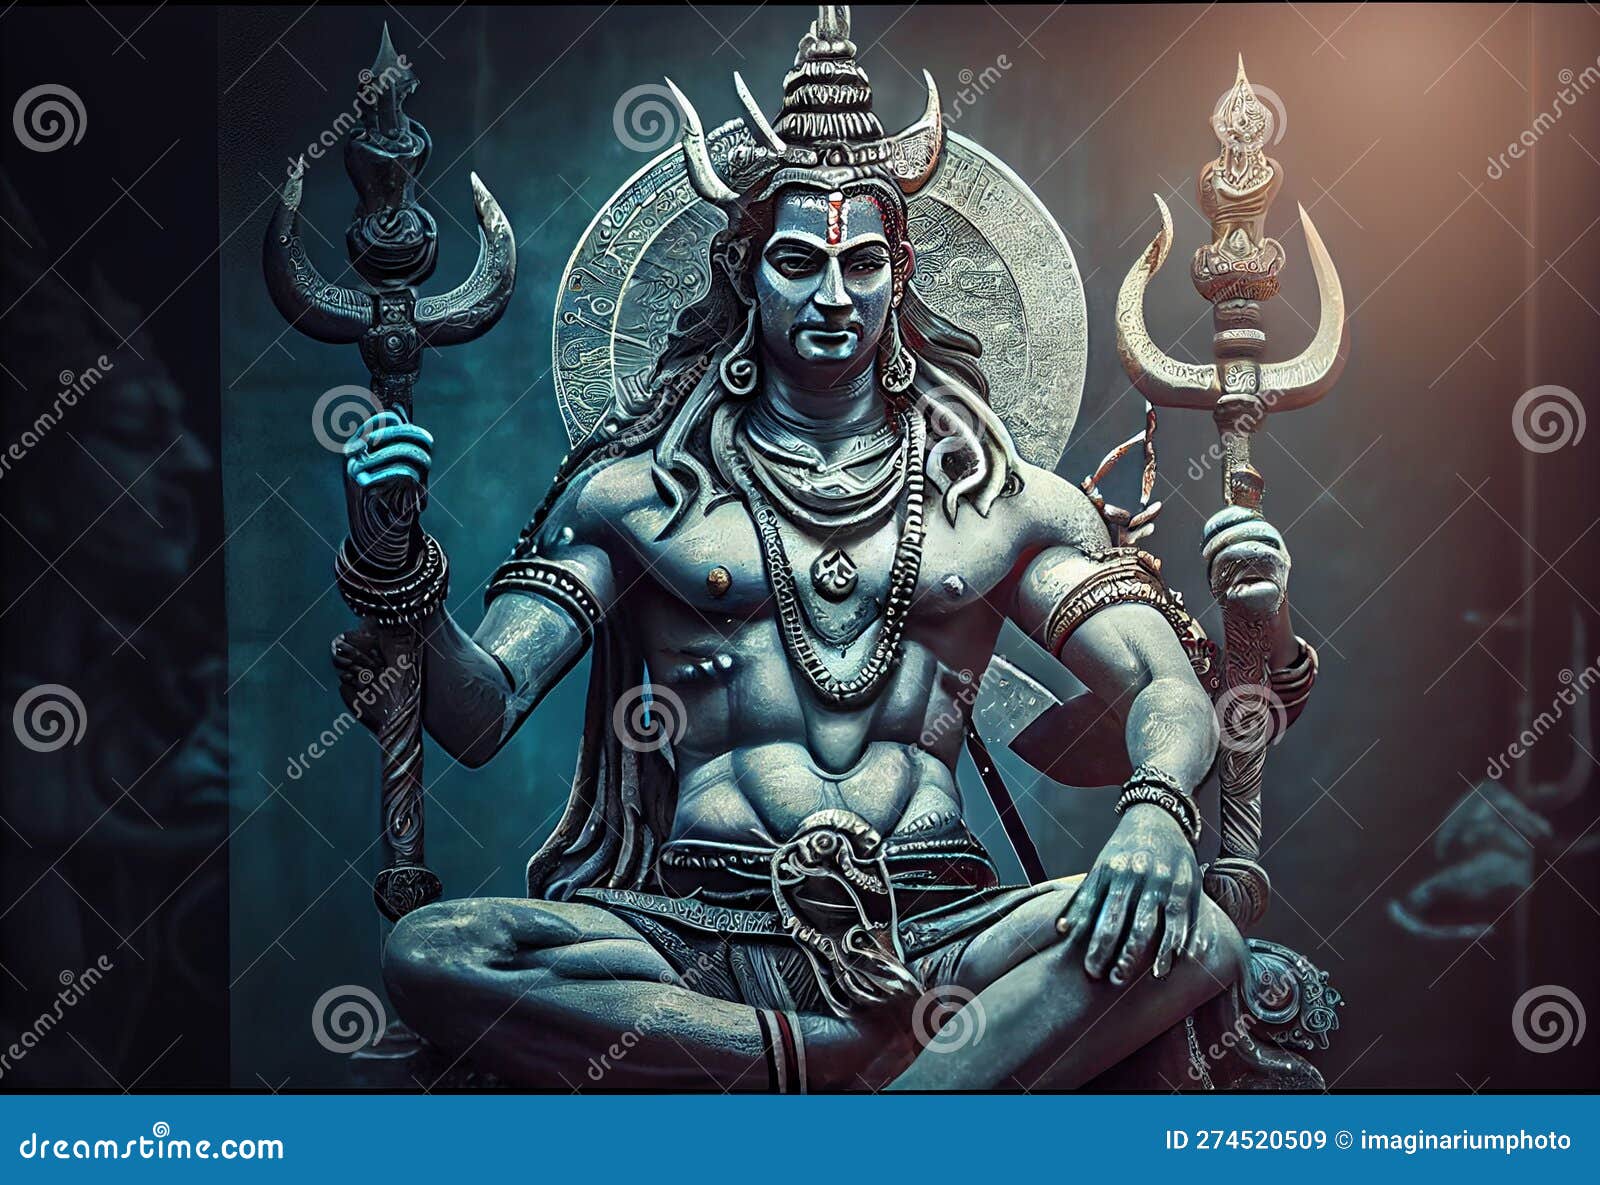 Illustration of Shiva God Wallpaper Background. Hindu God Shiva ...